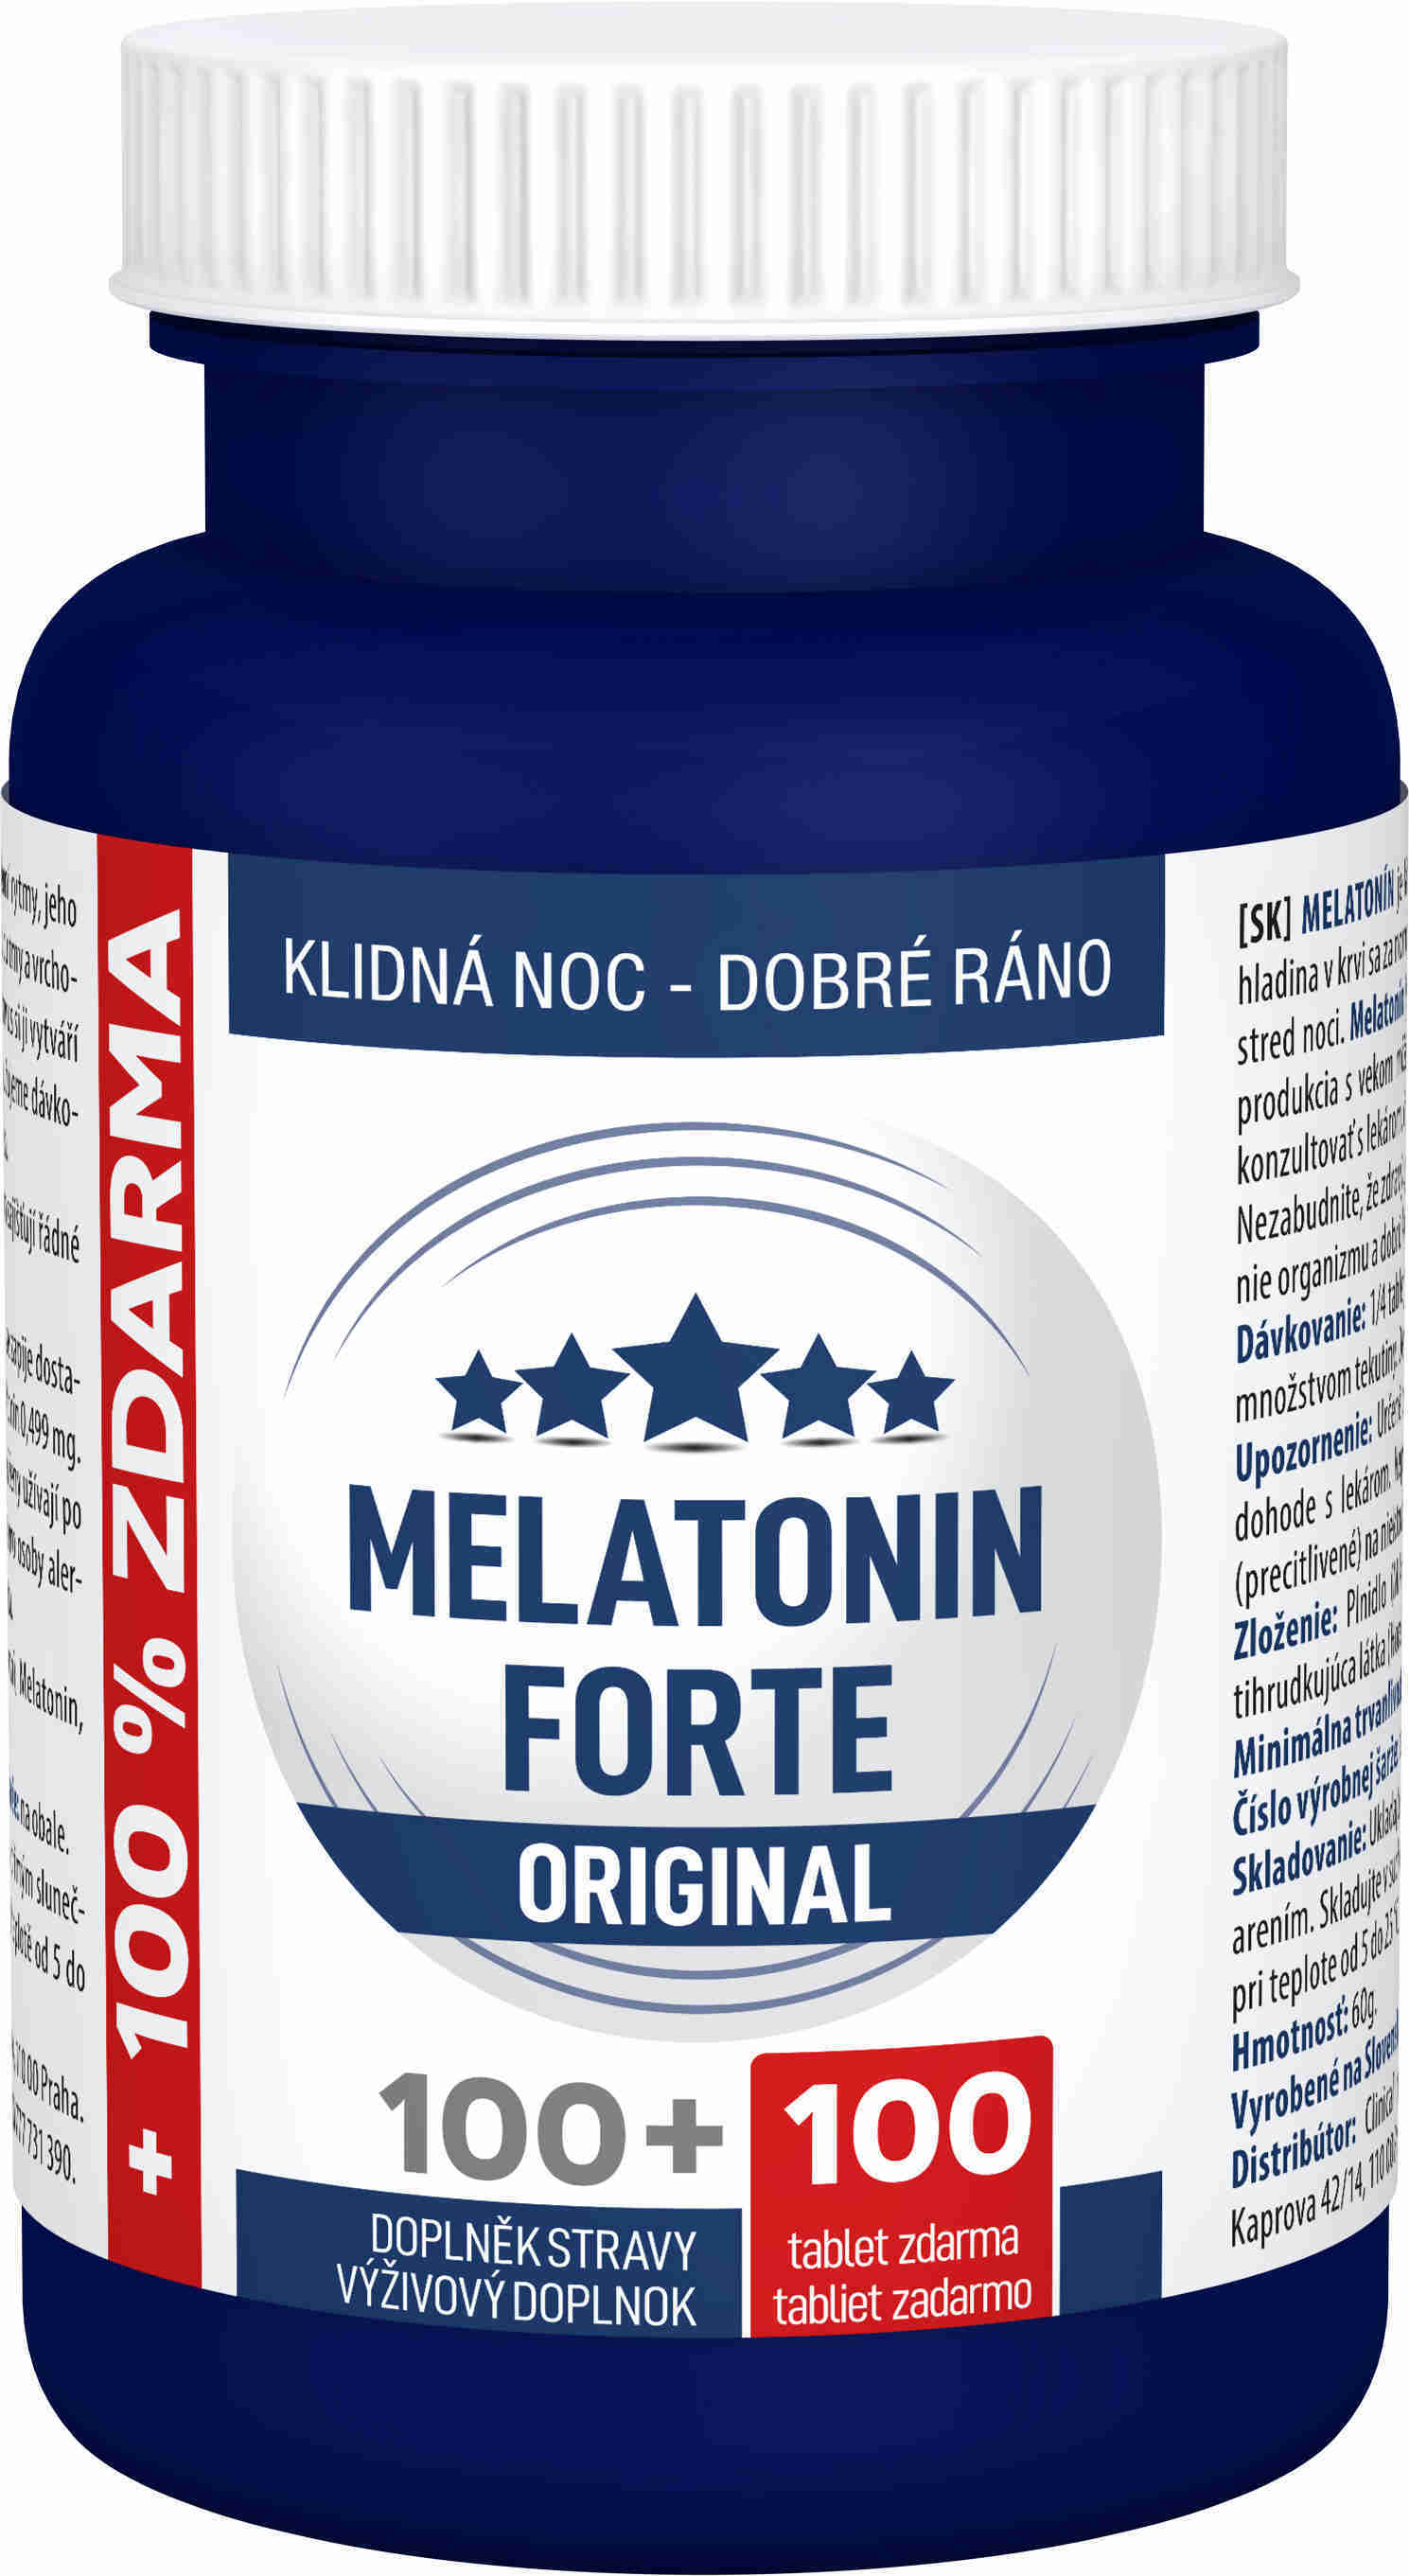 Clinical Melatonin FORTE Original 100 tbl. + 100 tbl. ZDARMA